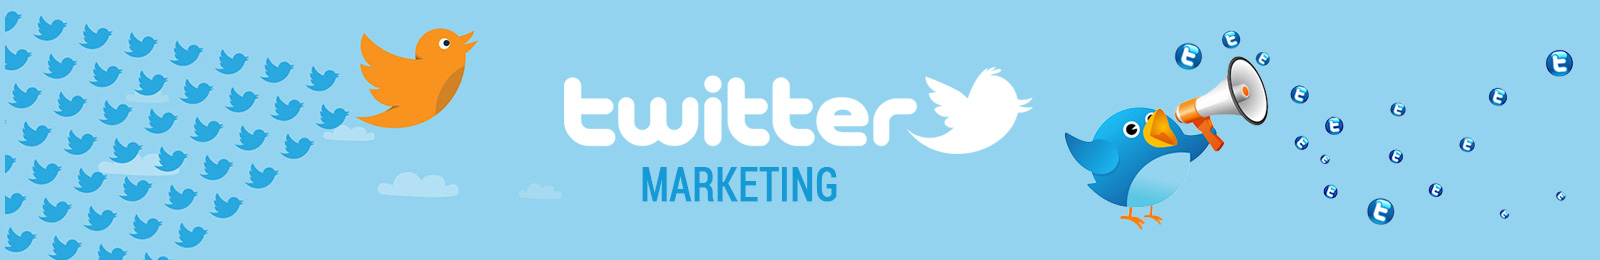 twitter marketing course training institute proideators